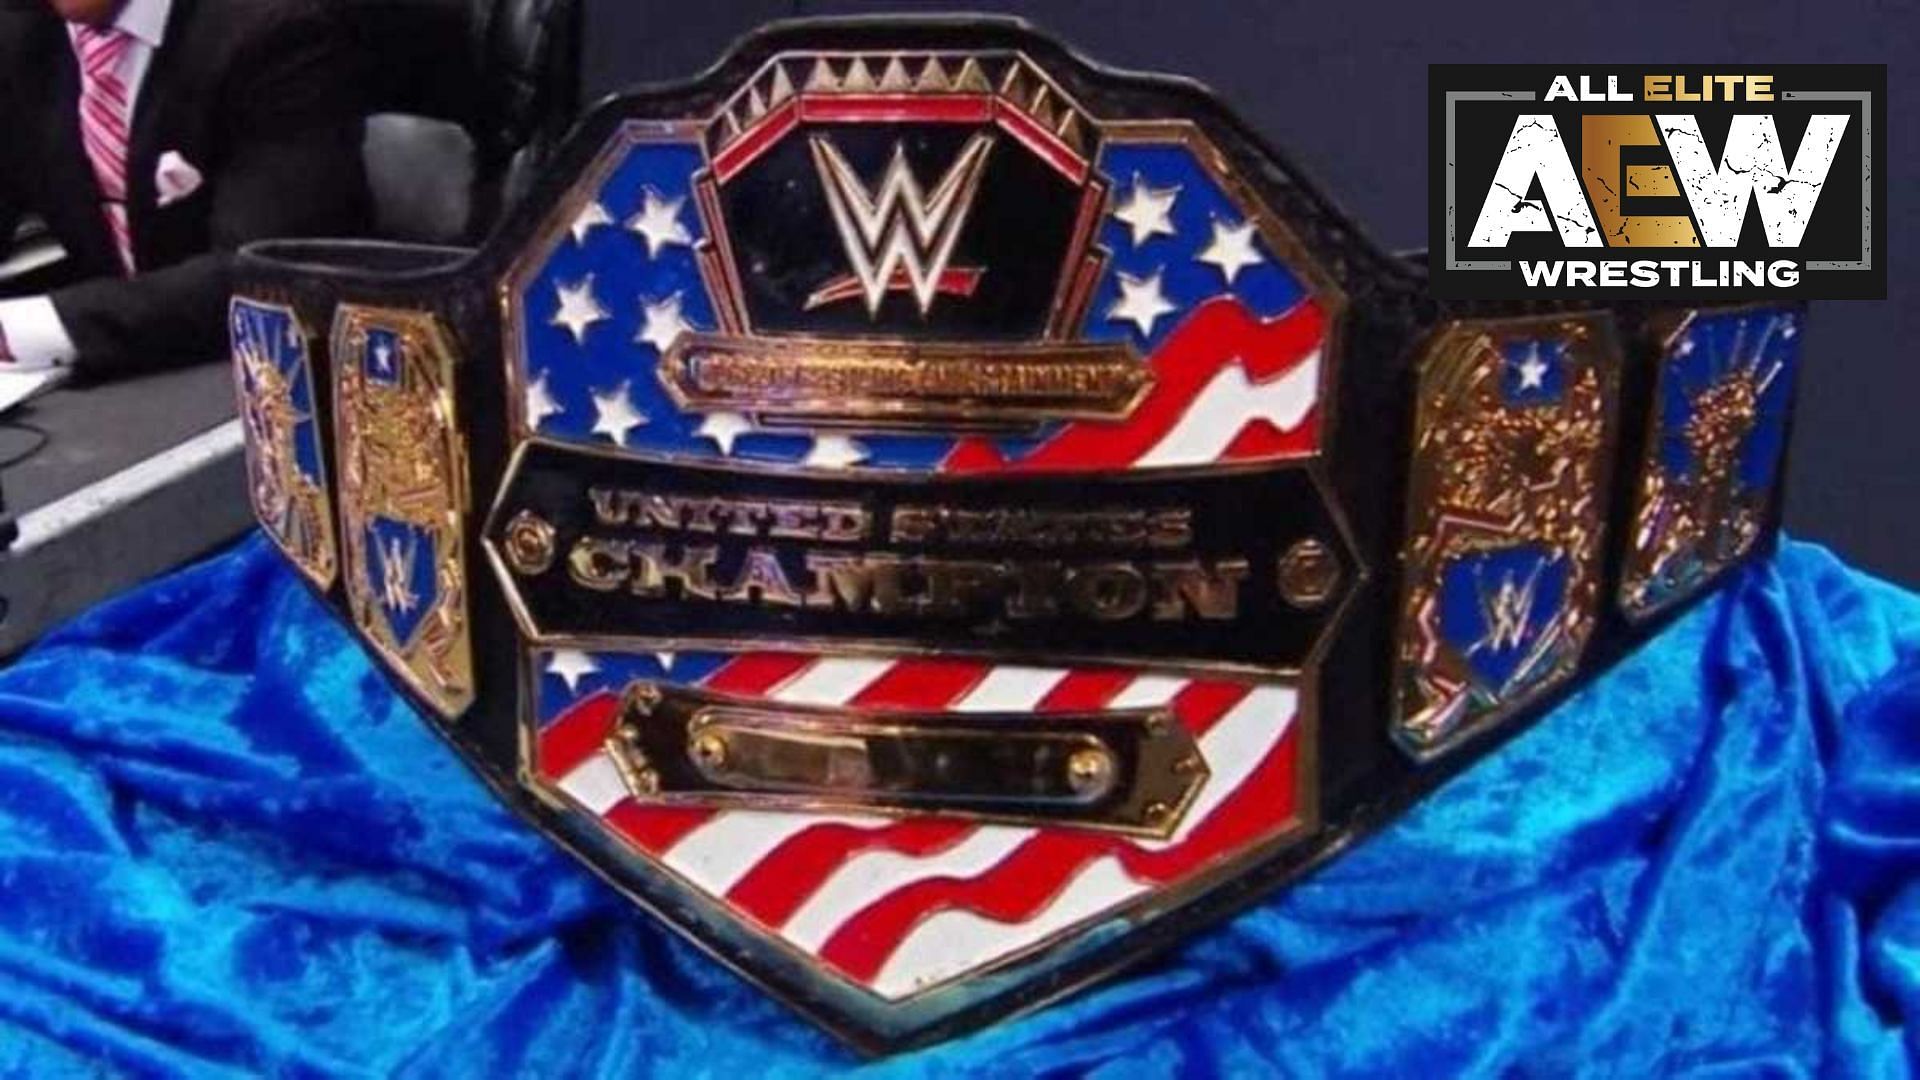 The WWE United States Championship